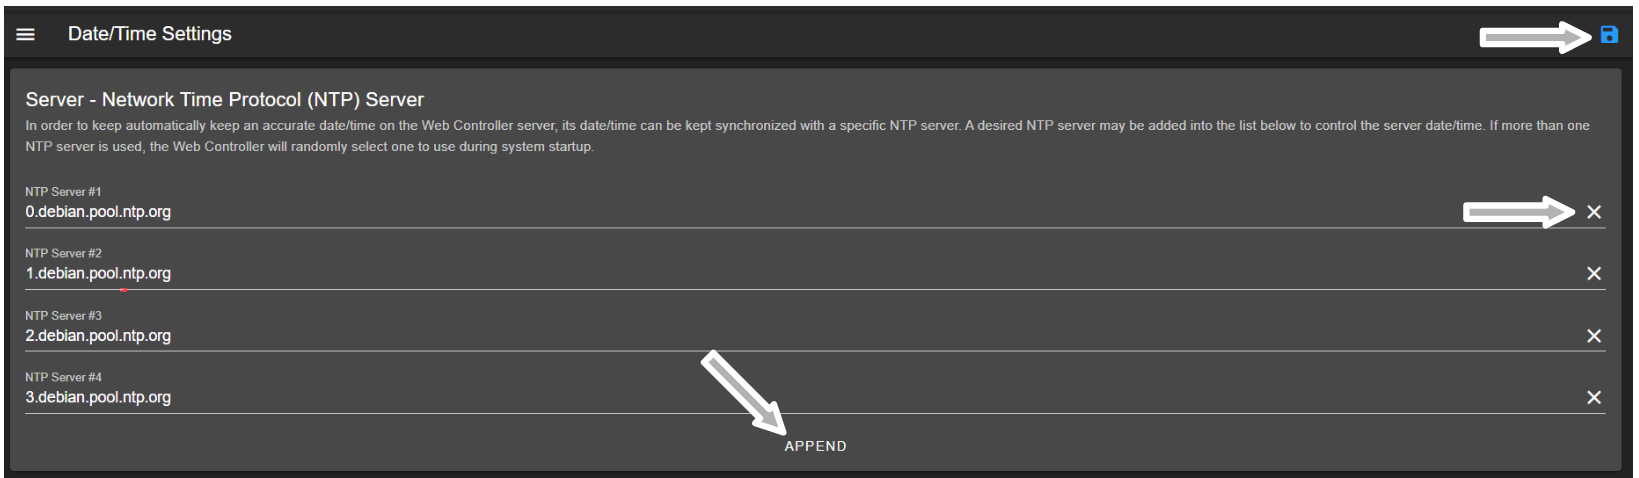 Editing the NTP for custom setting